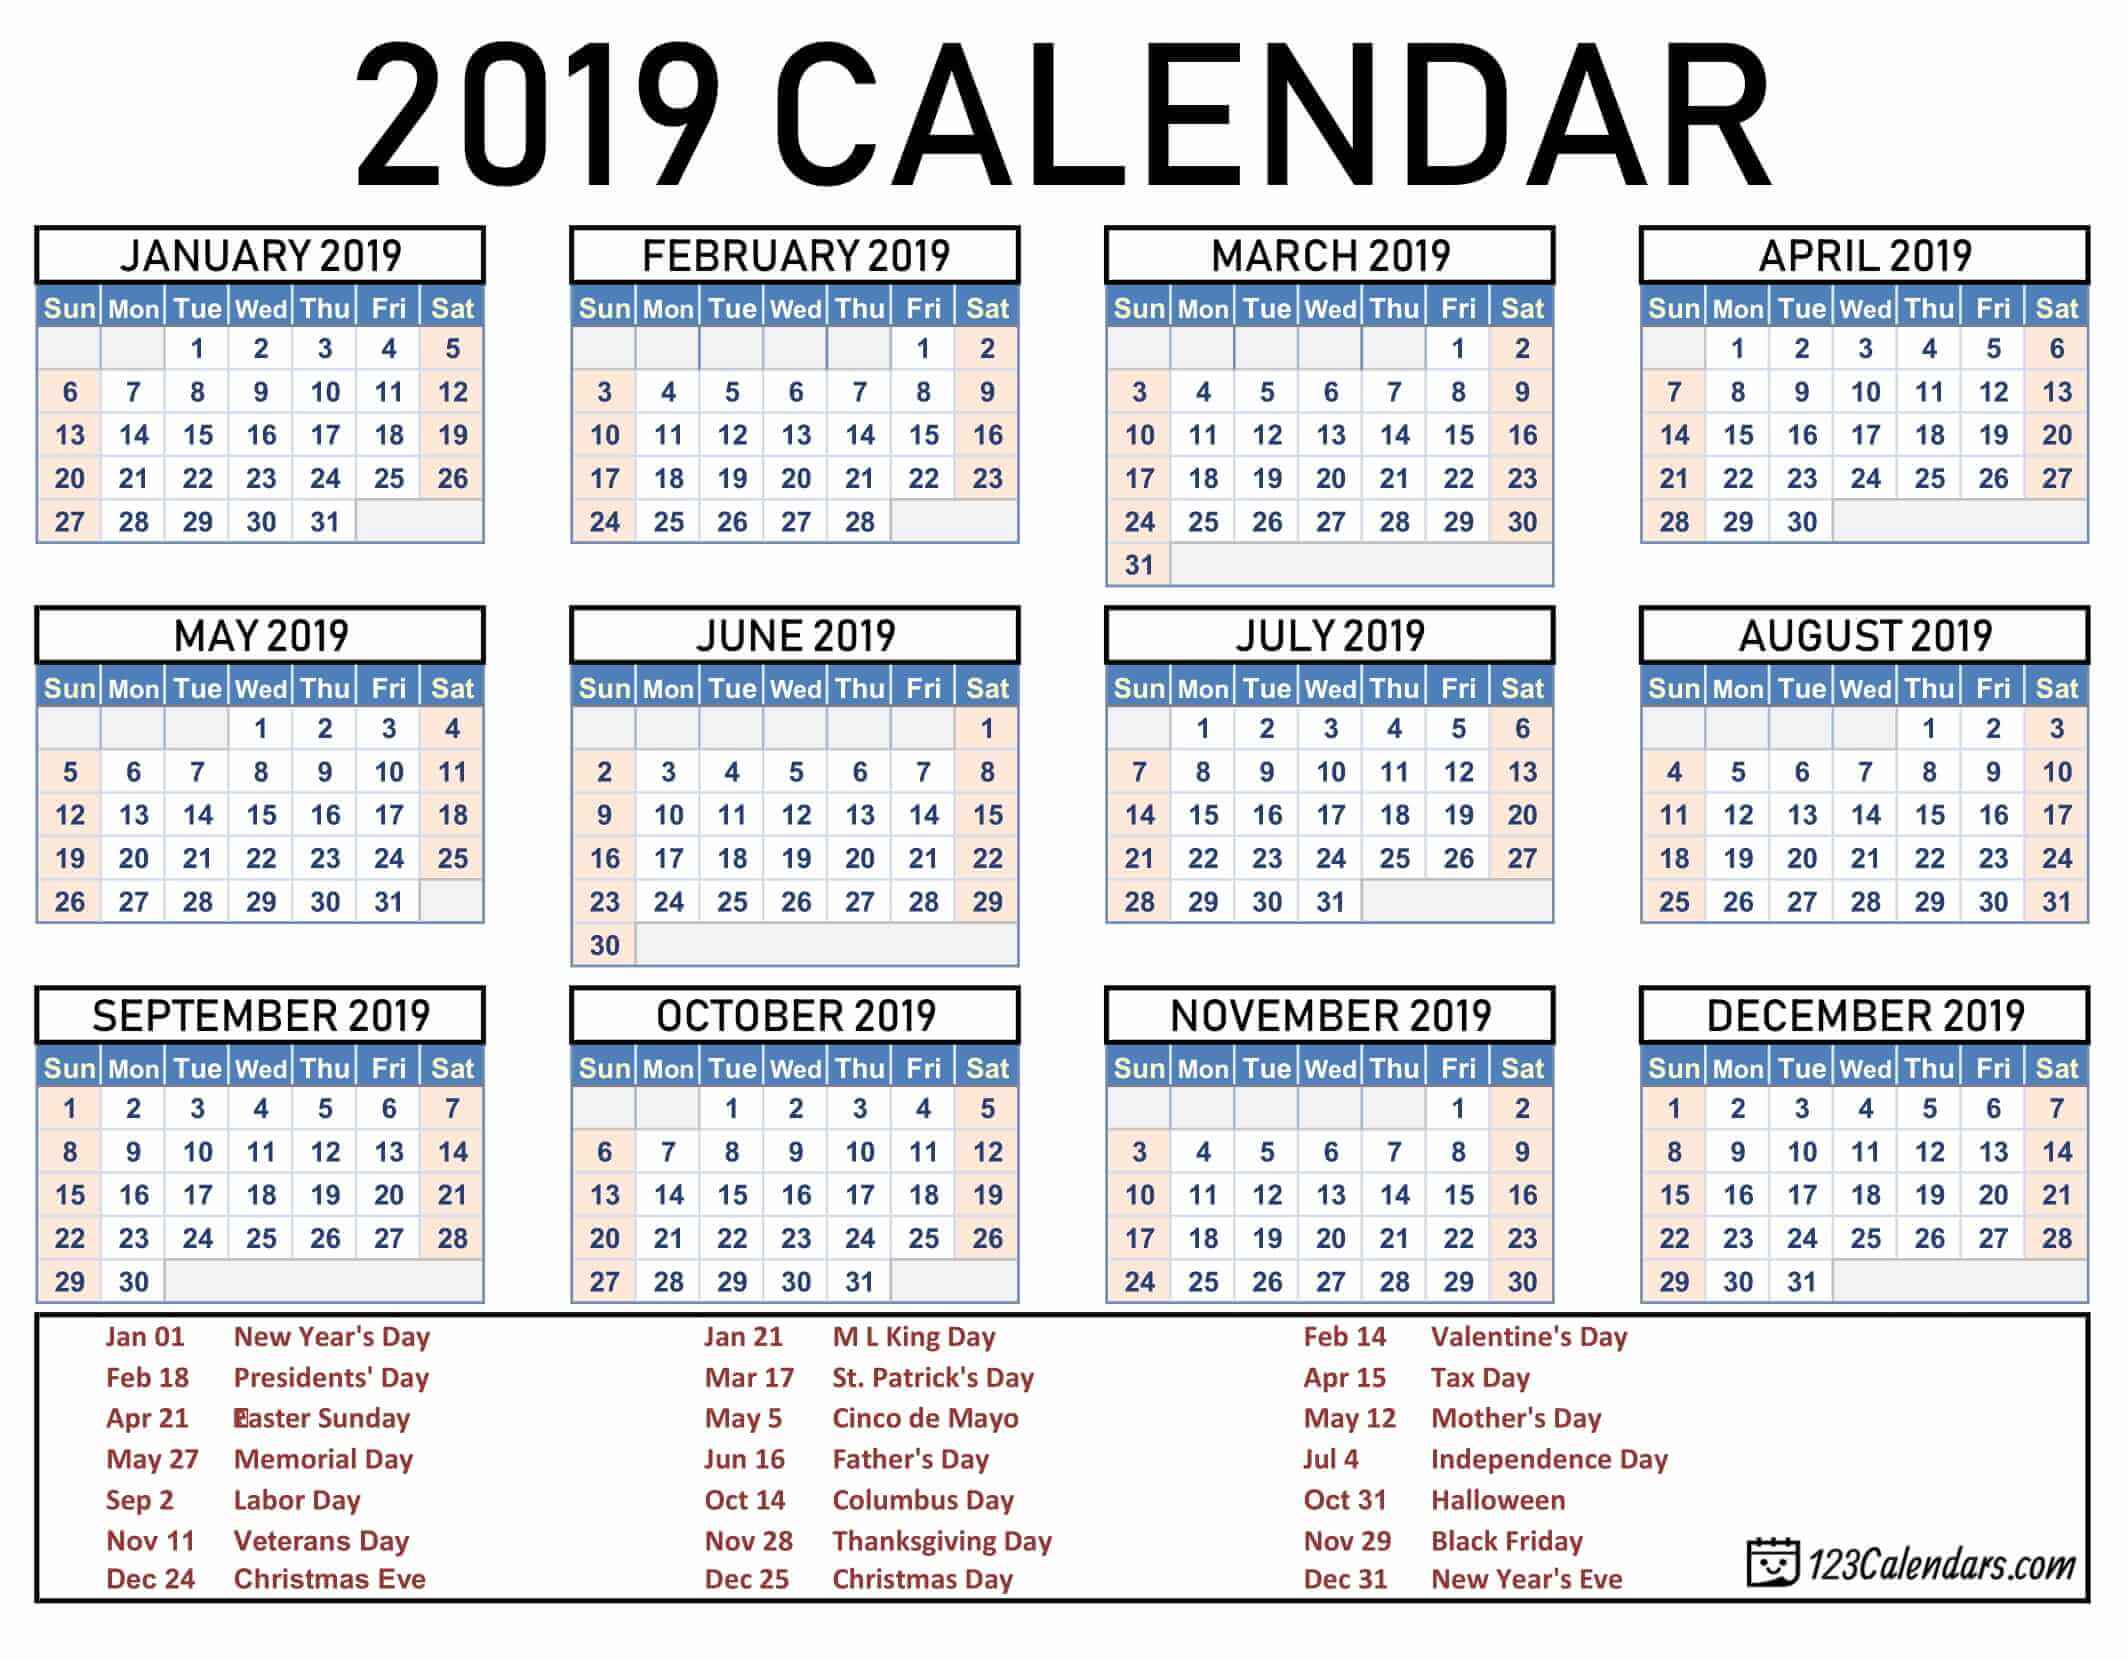 microsoft word monthly calendar template 2019